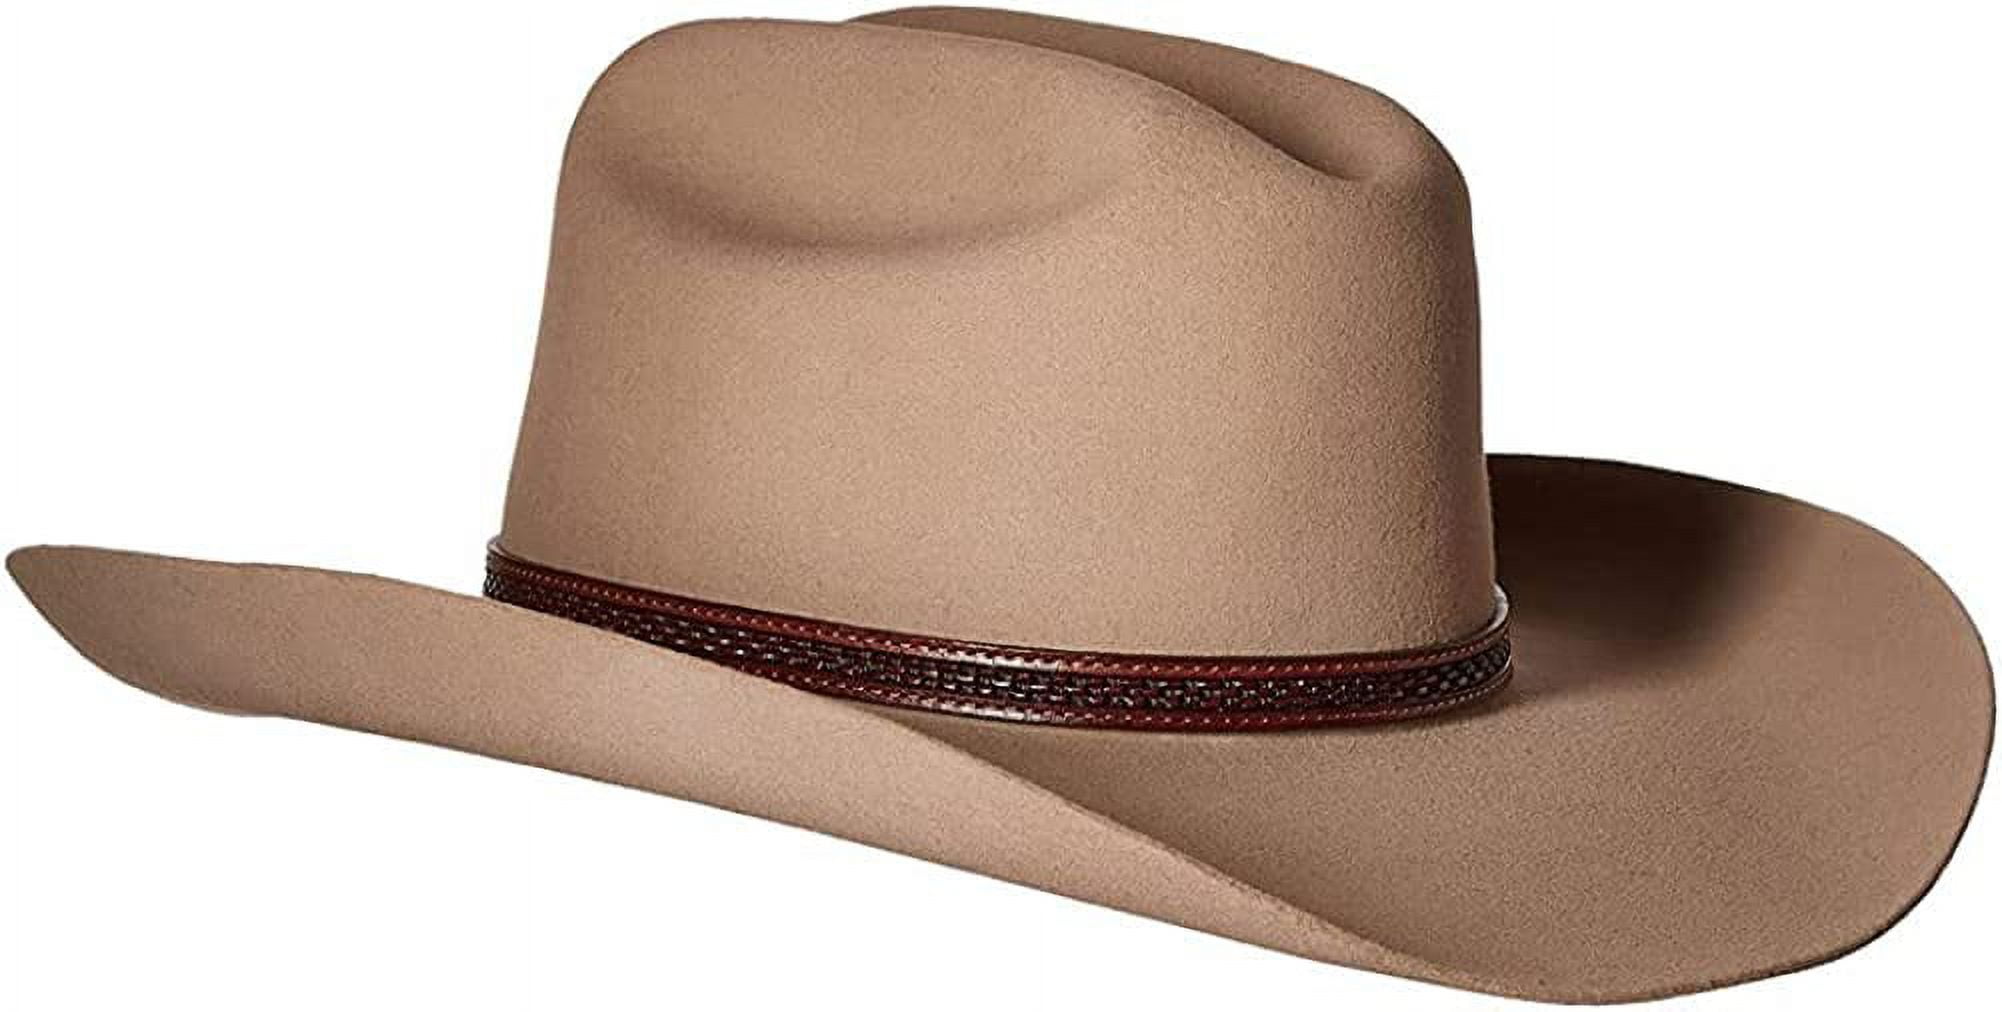 Stetson Tellus Shantung Chocolate Unisex Straw Cowboy Hat XSTELS-253622 XL